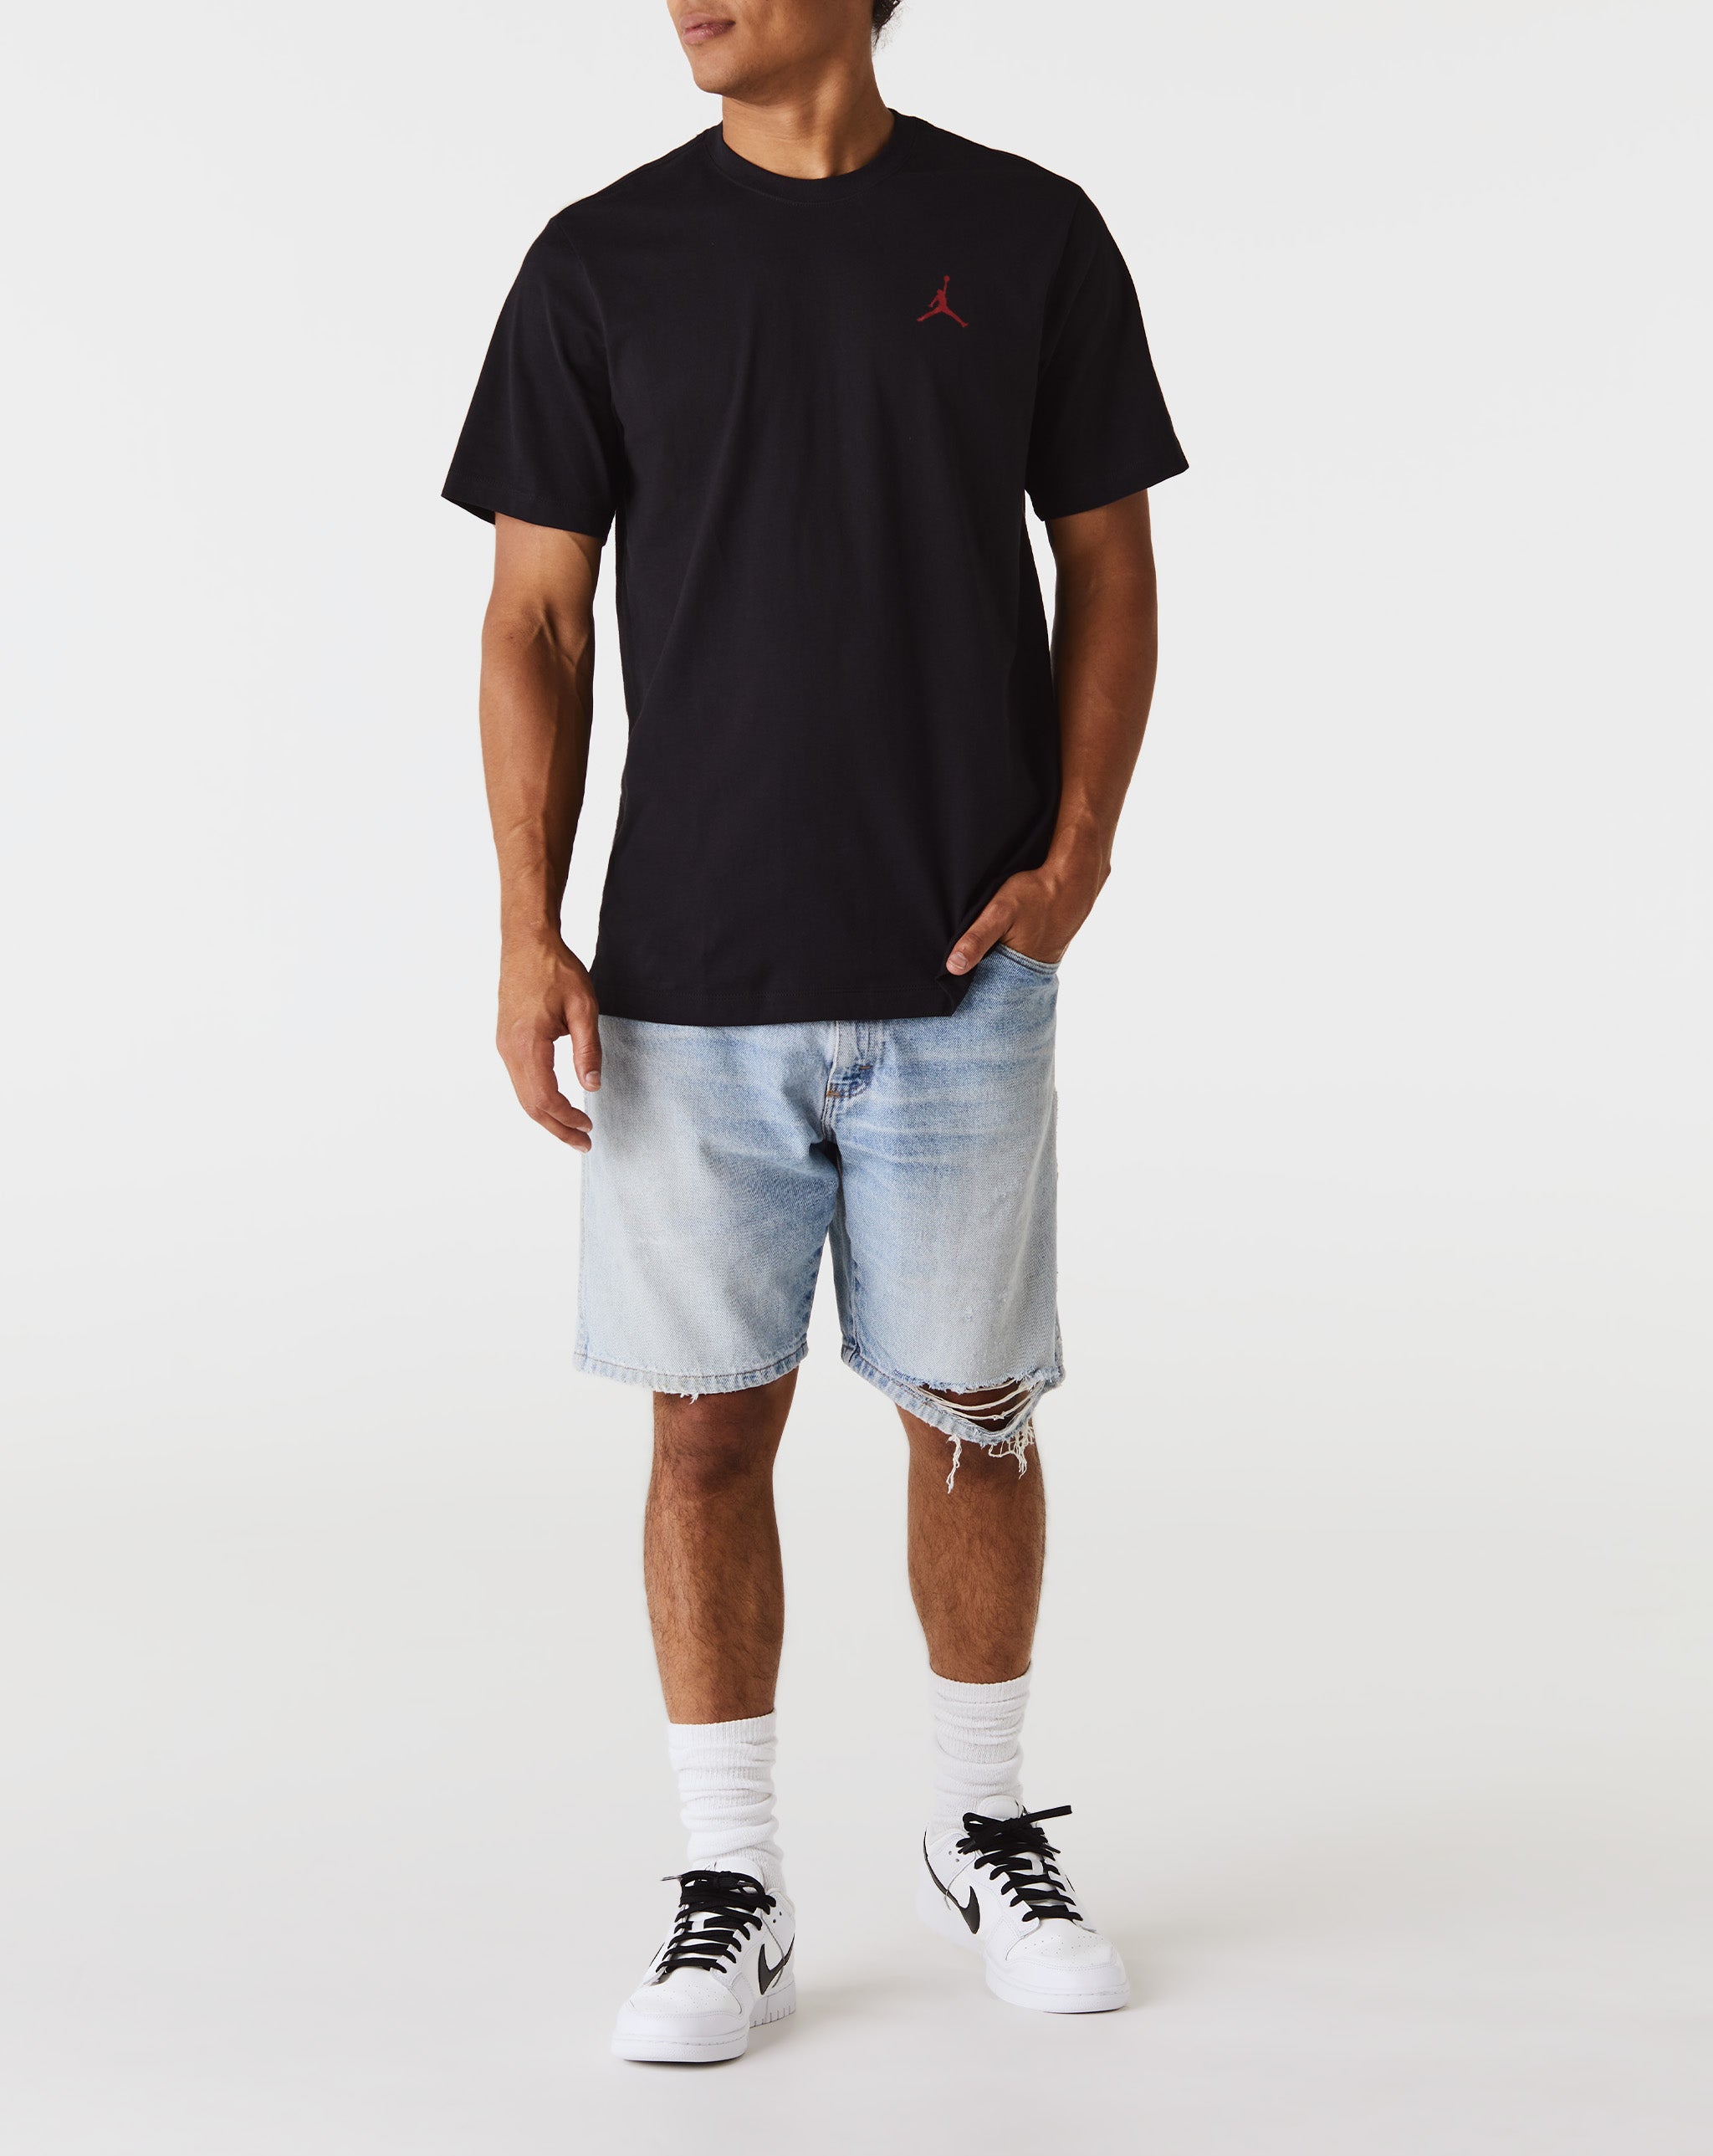 Air Jordan Evolution T-Shirt - Rule of Next Apparel